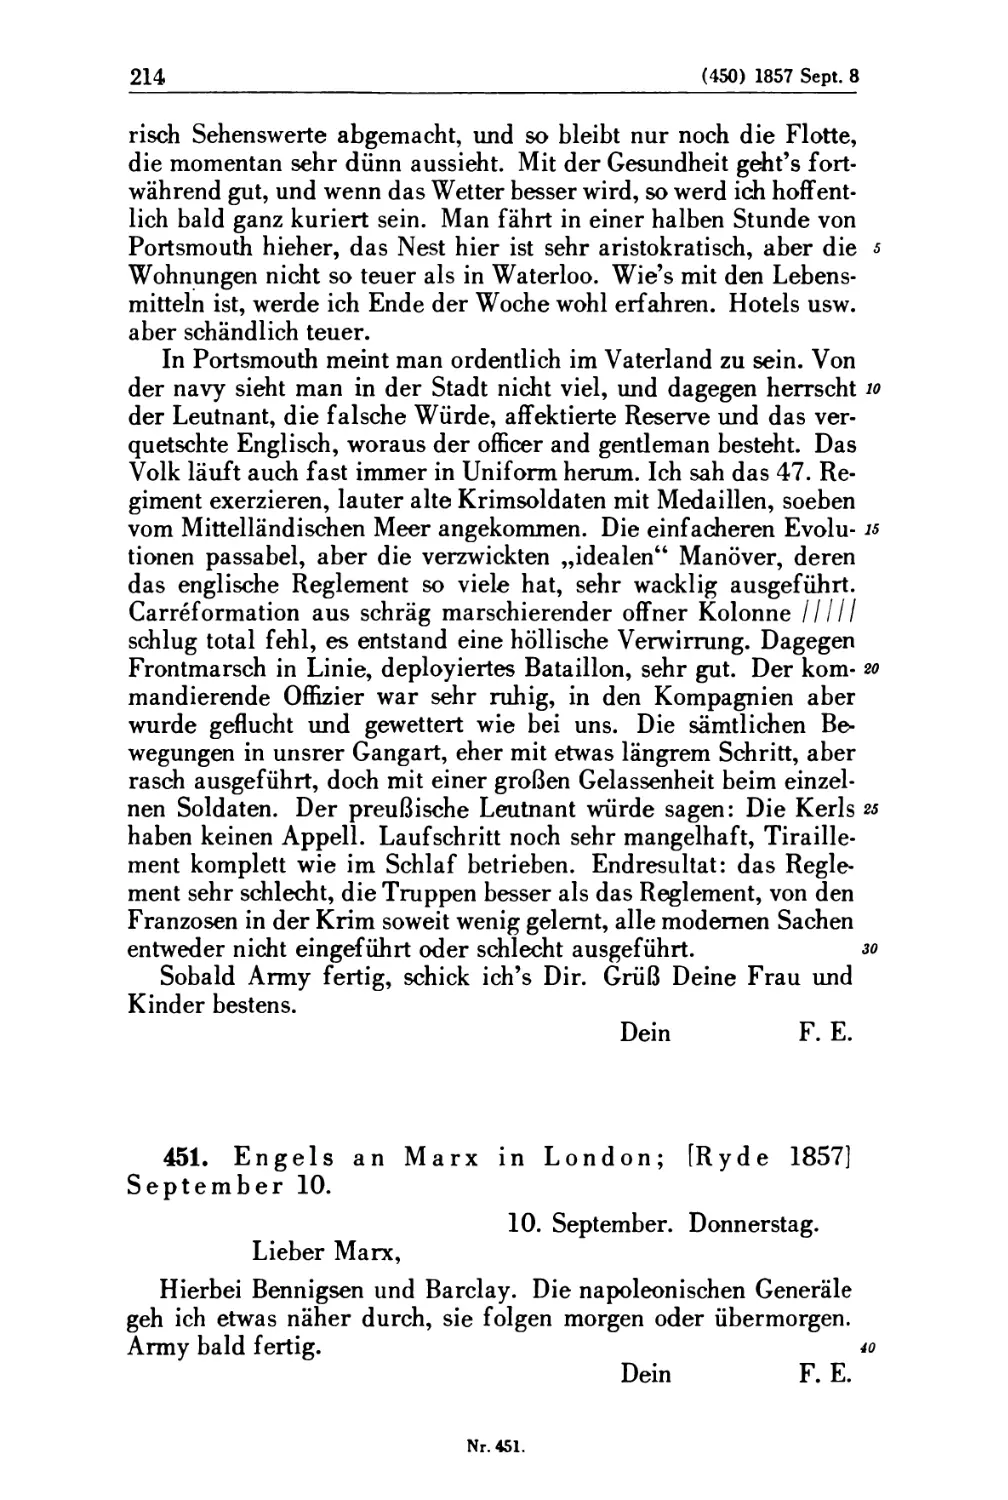 451. Engels an Marx in London; [Ryde 1857] September 10